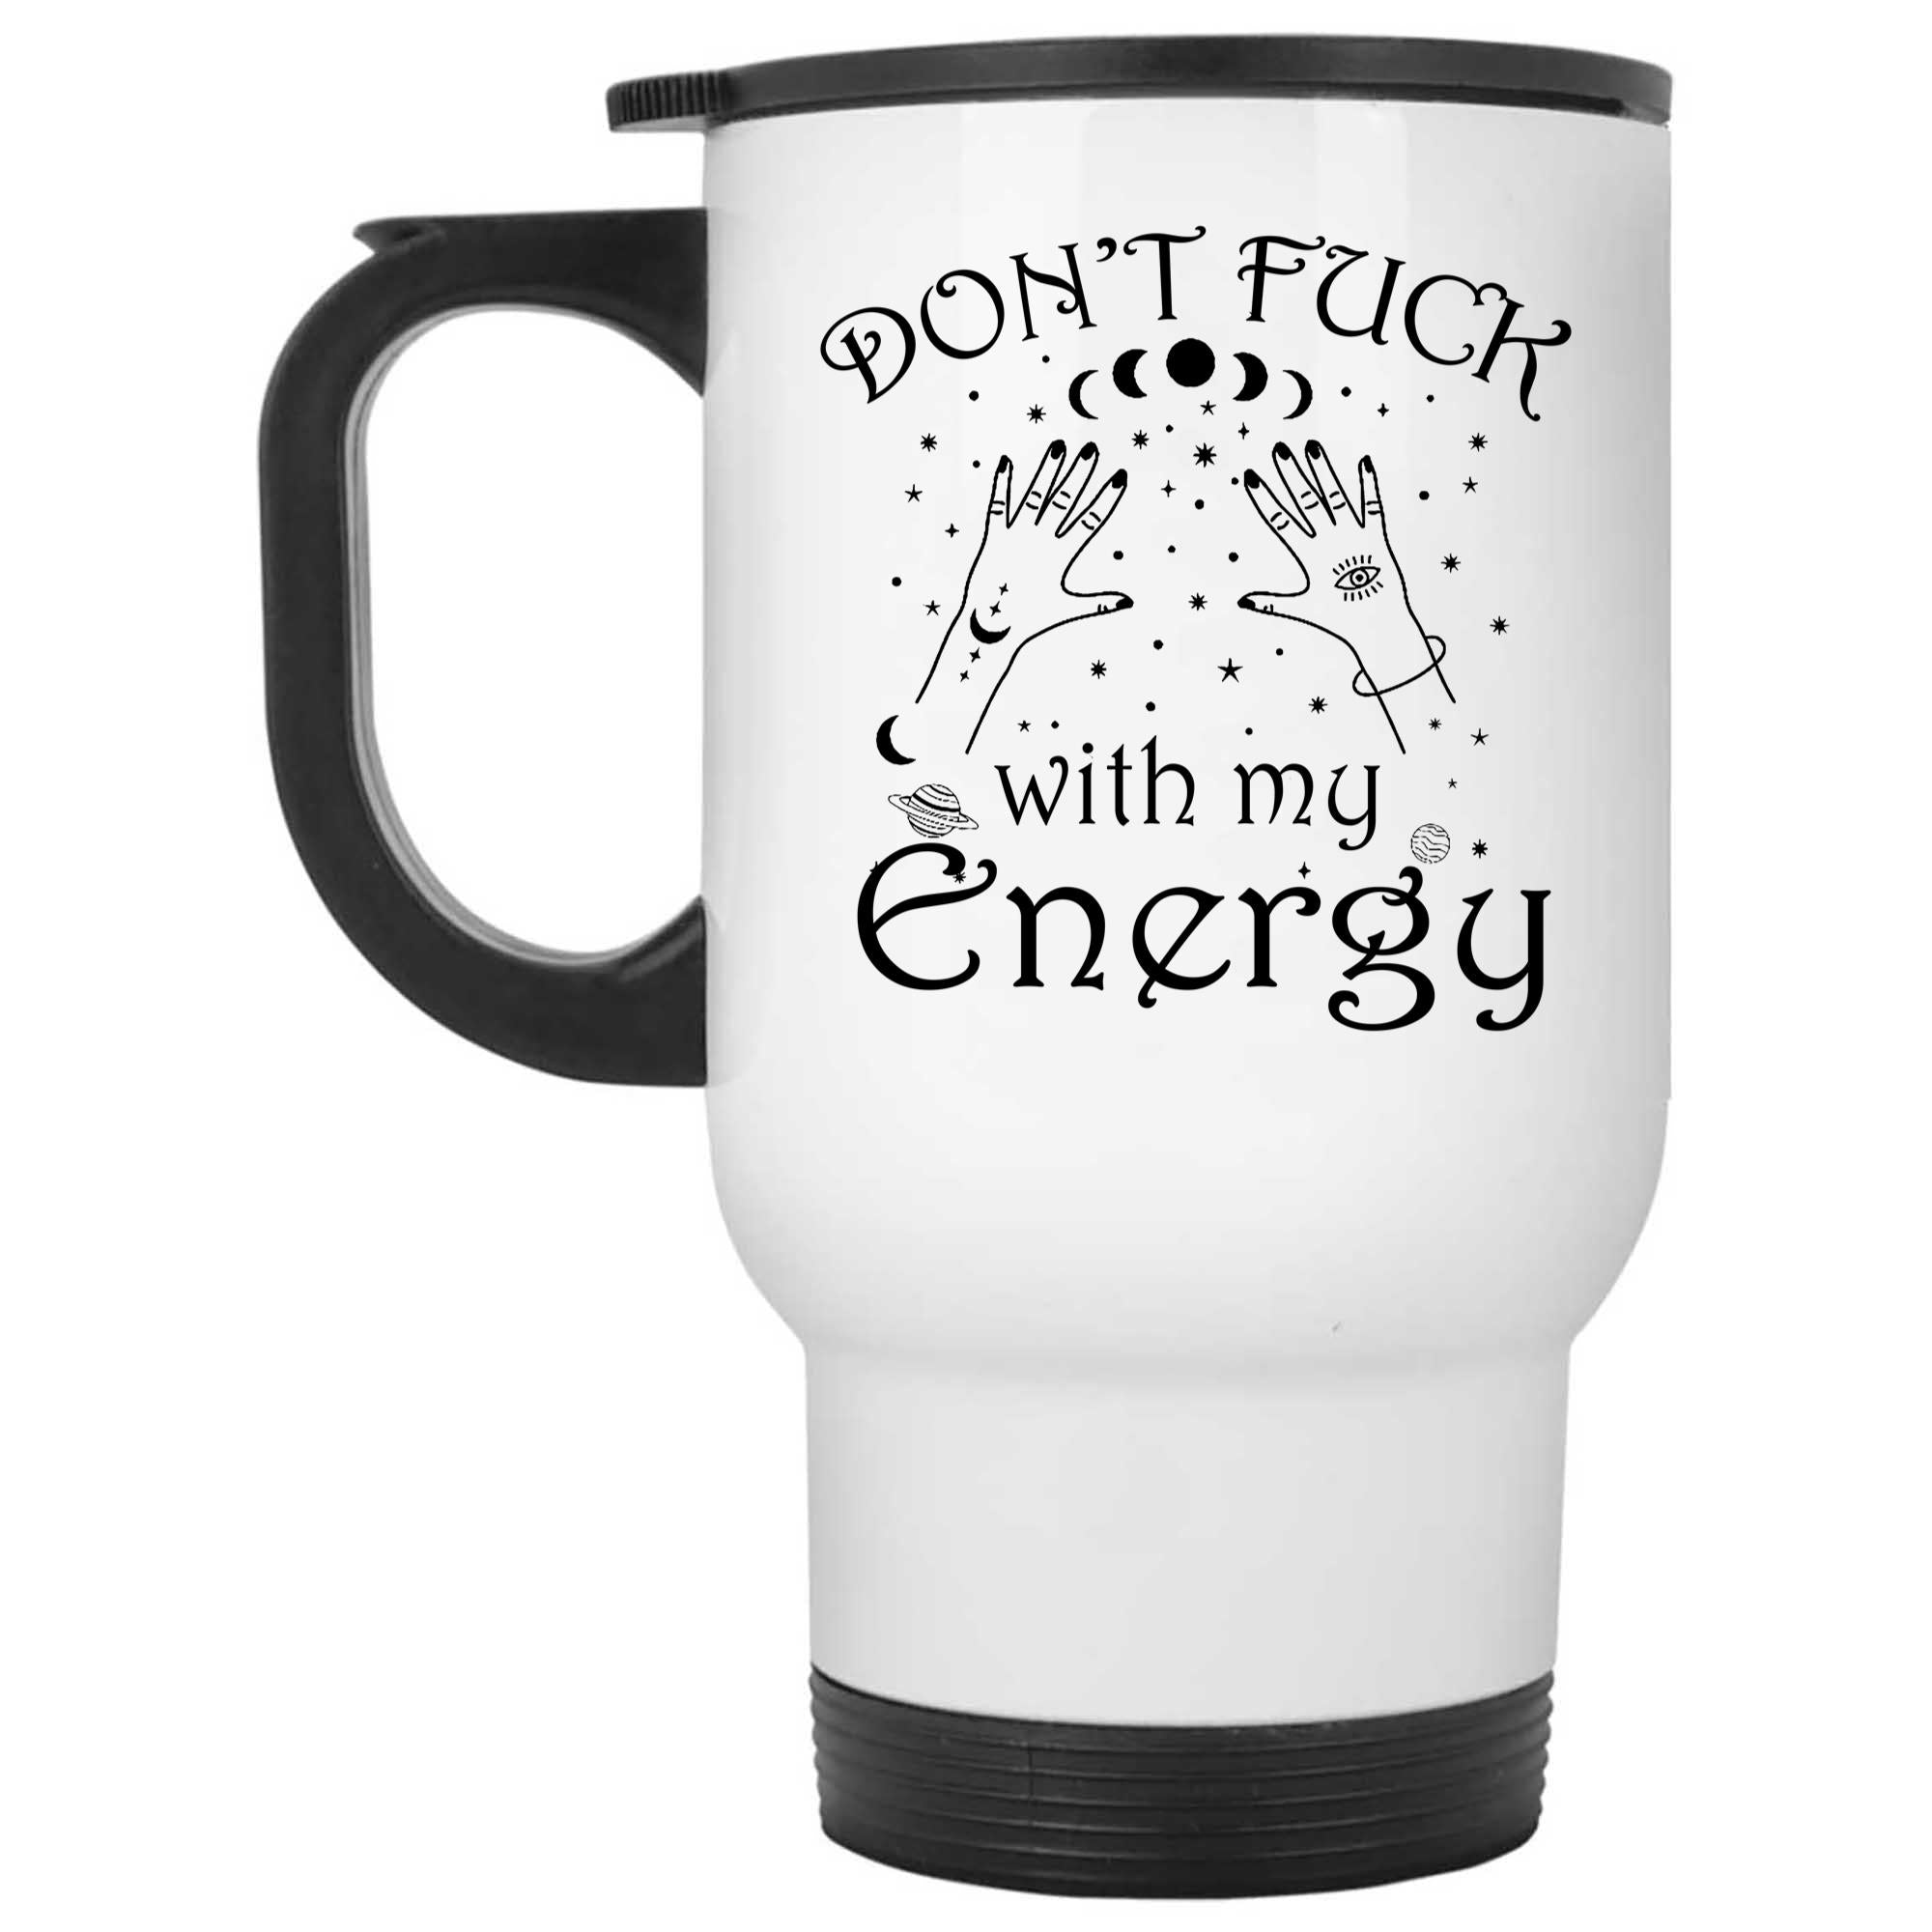 Skitongifts Coffee Mug Funny Ceramic Novelty Don't F With My Energy Wi